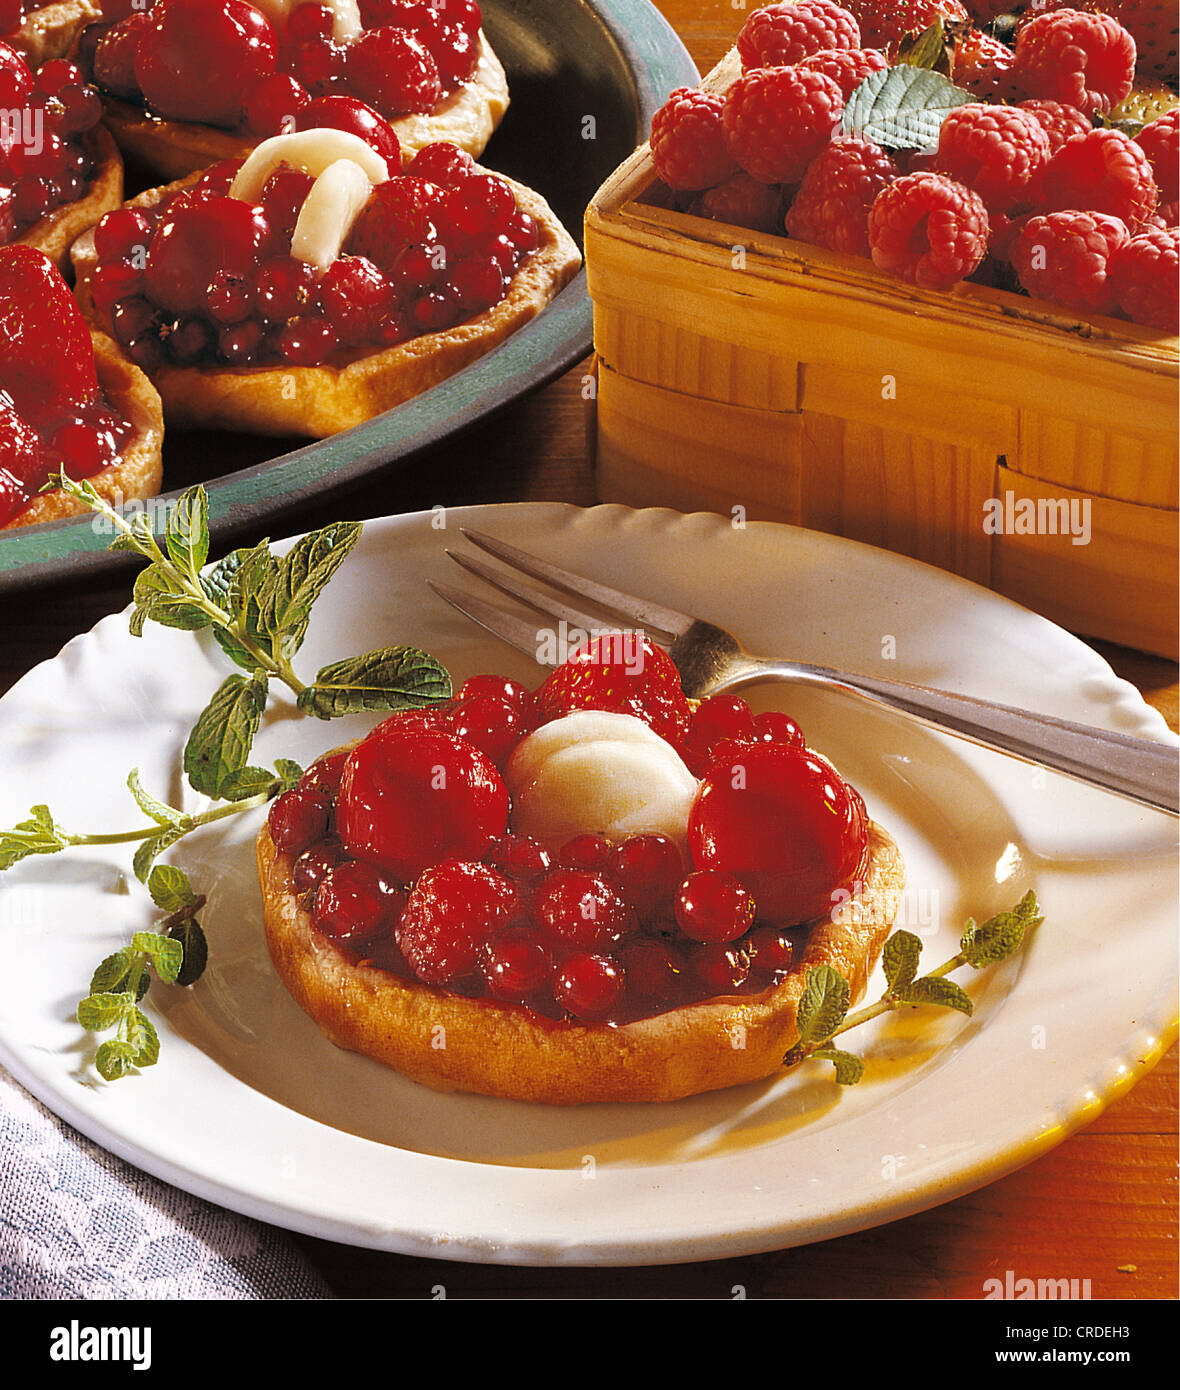 Fruit tarts with summer fruits, USA. Stock Photo